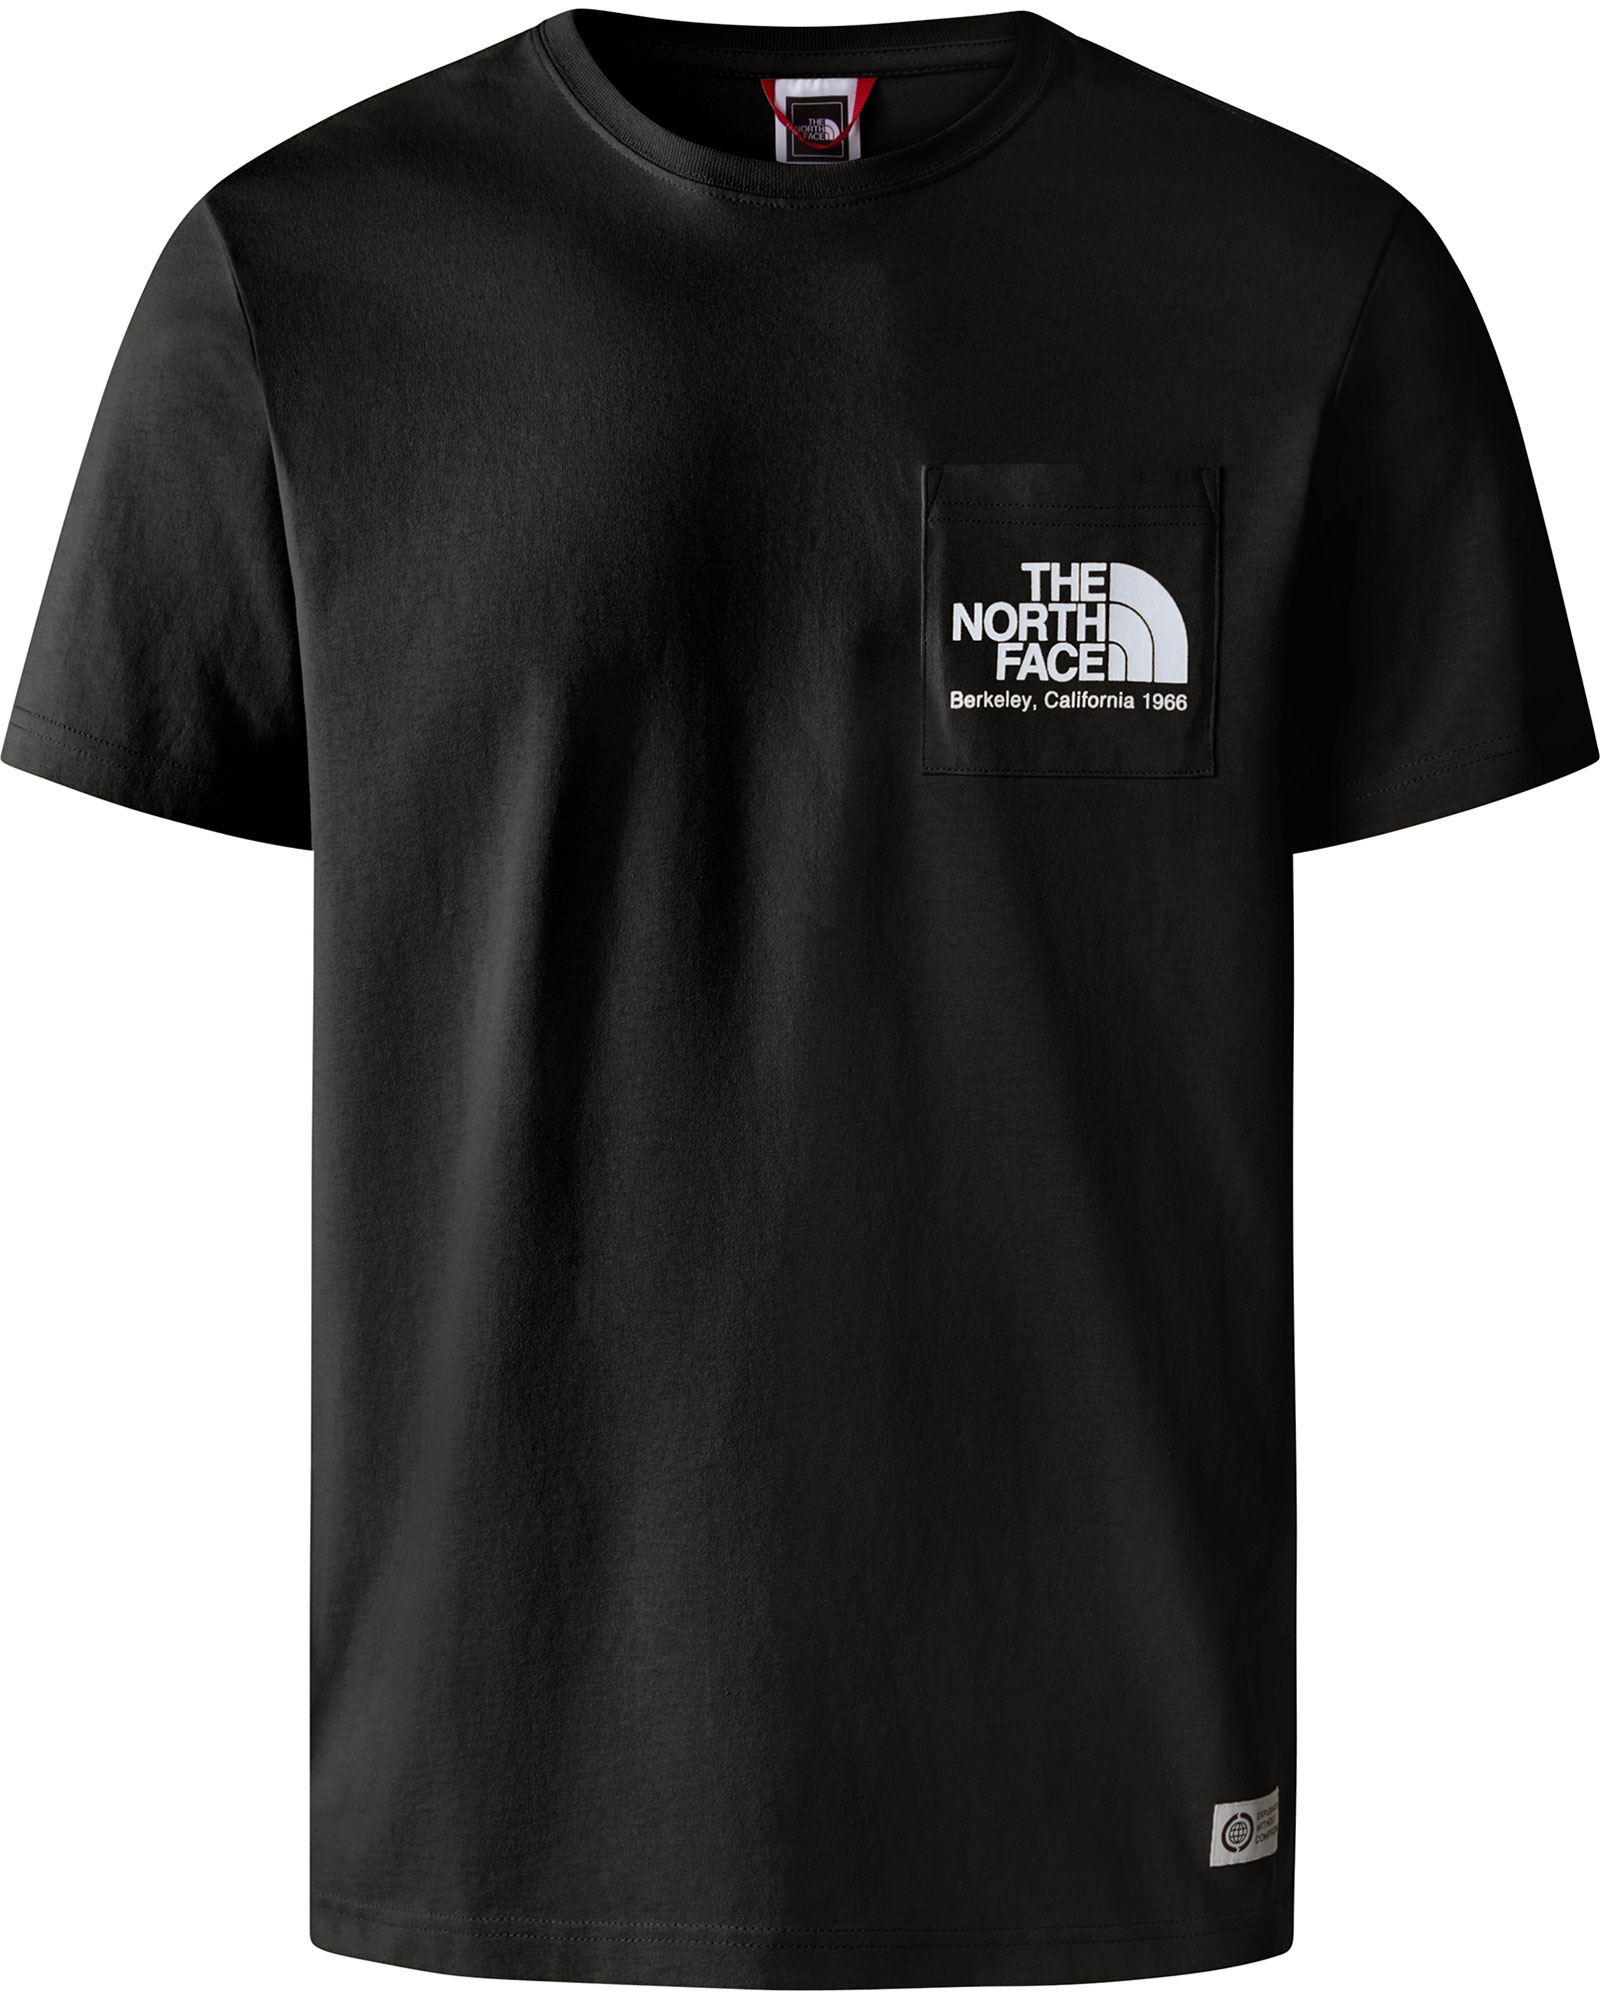 The North Face Men’s Berkeley California Pocket T Shirt - TNF Black XS